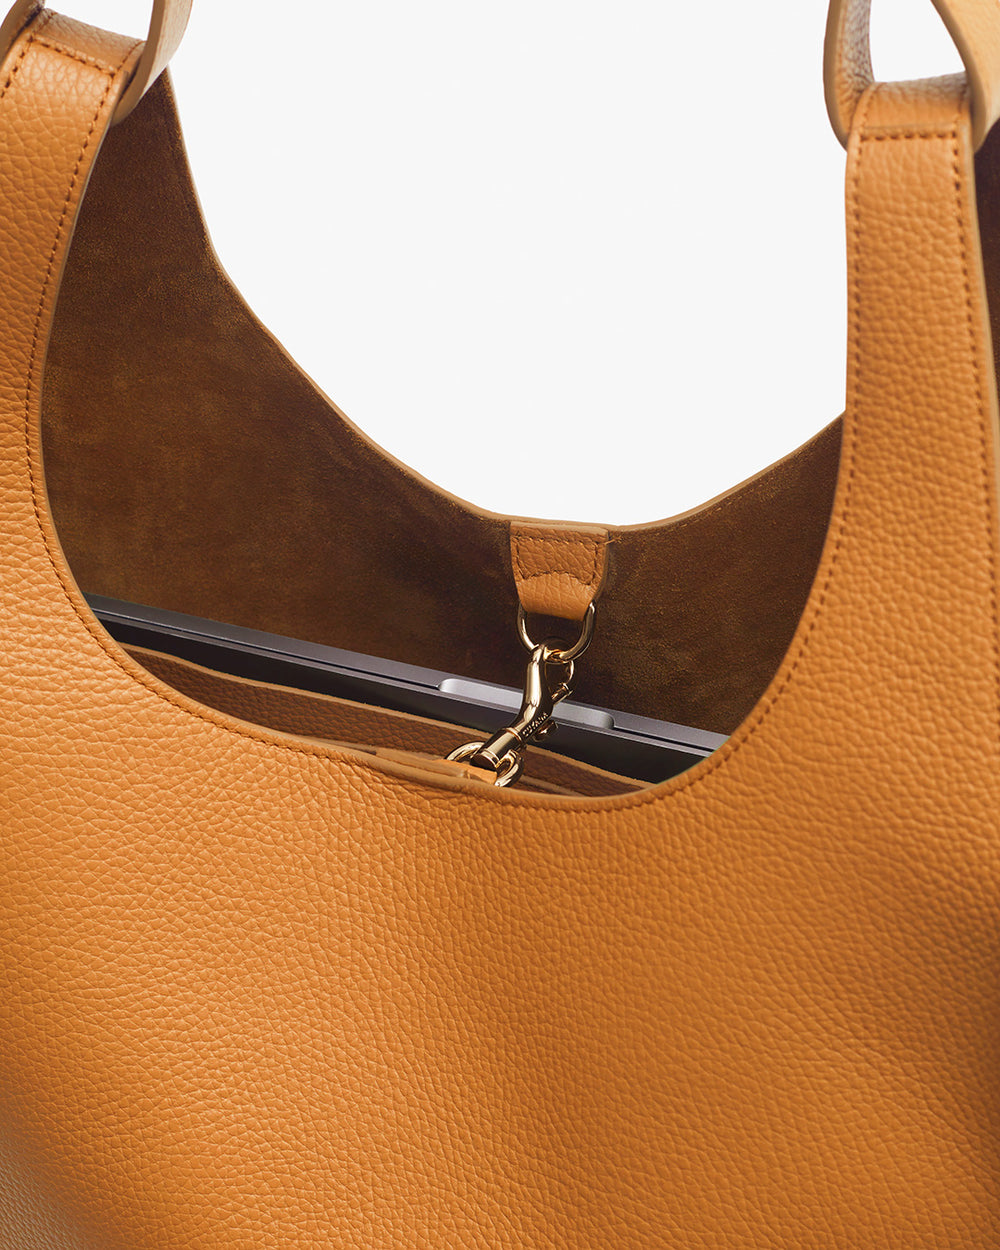 Close-up of a handbag with a metallic clasp and visible interior lining.